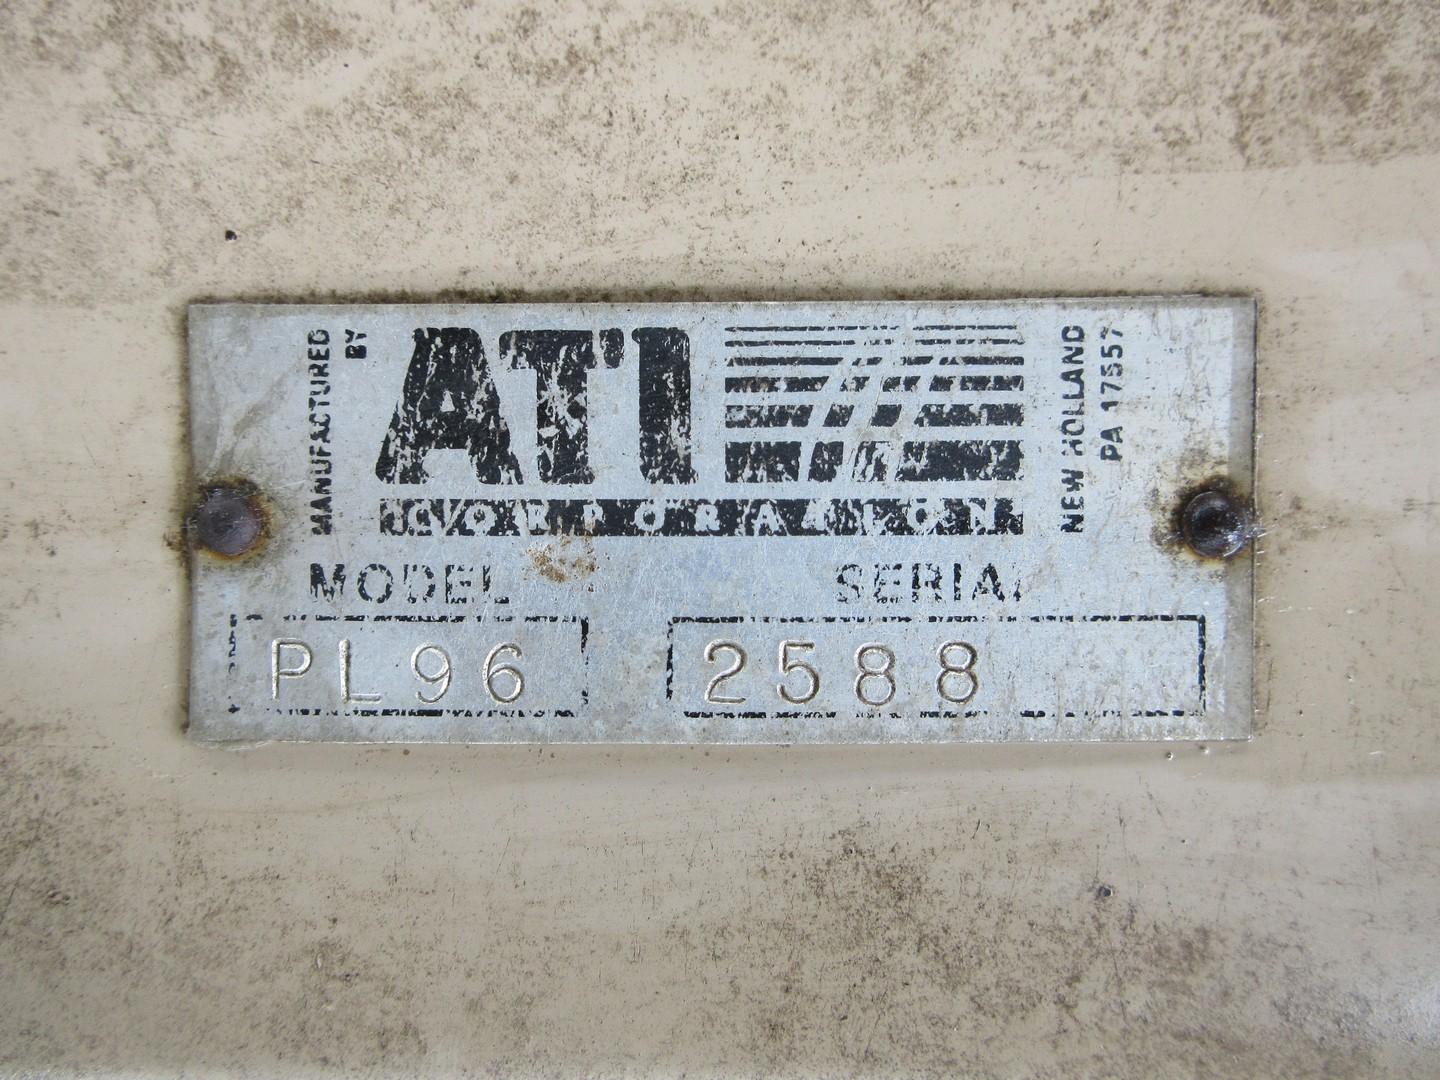 ATI PL96 96" Box Grader